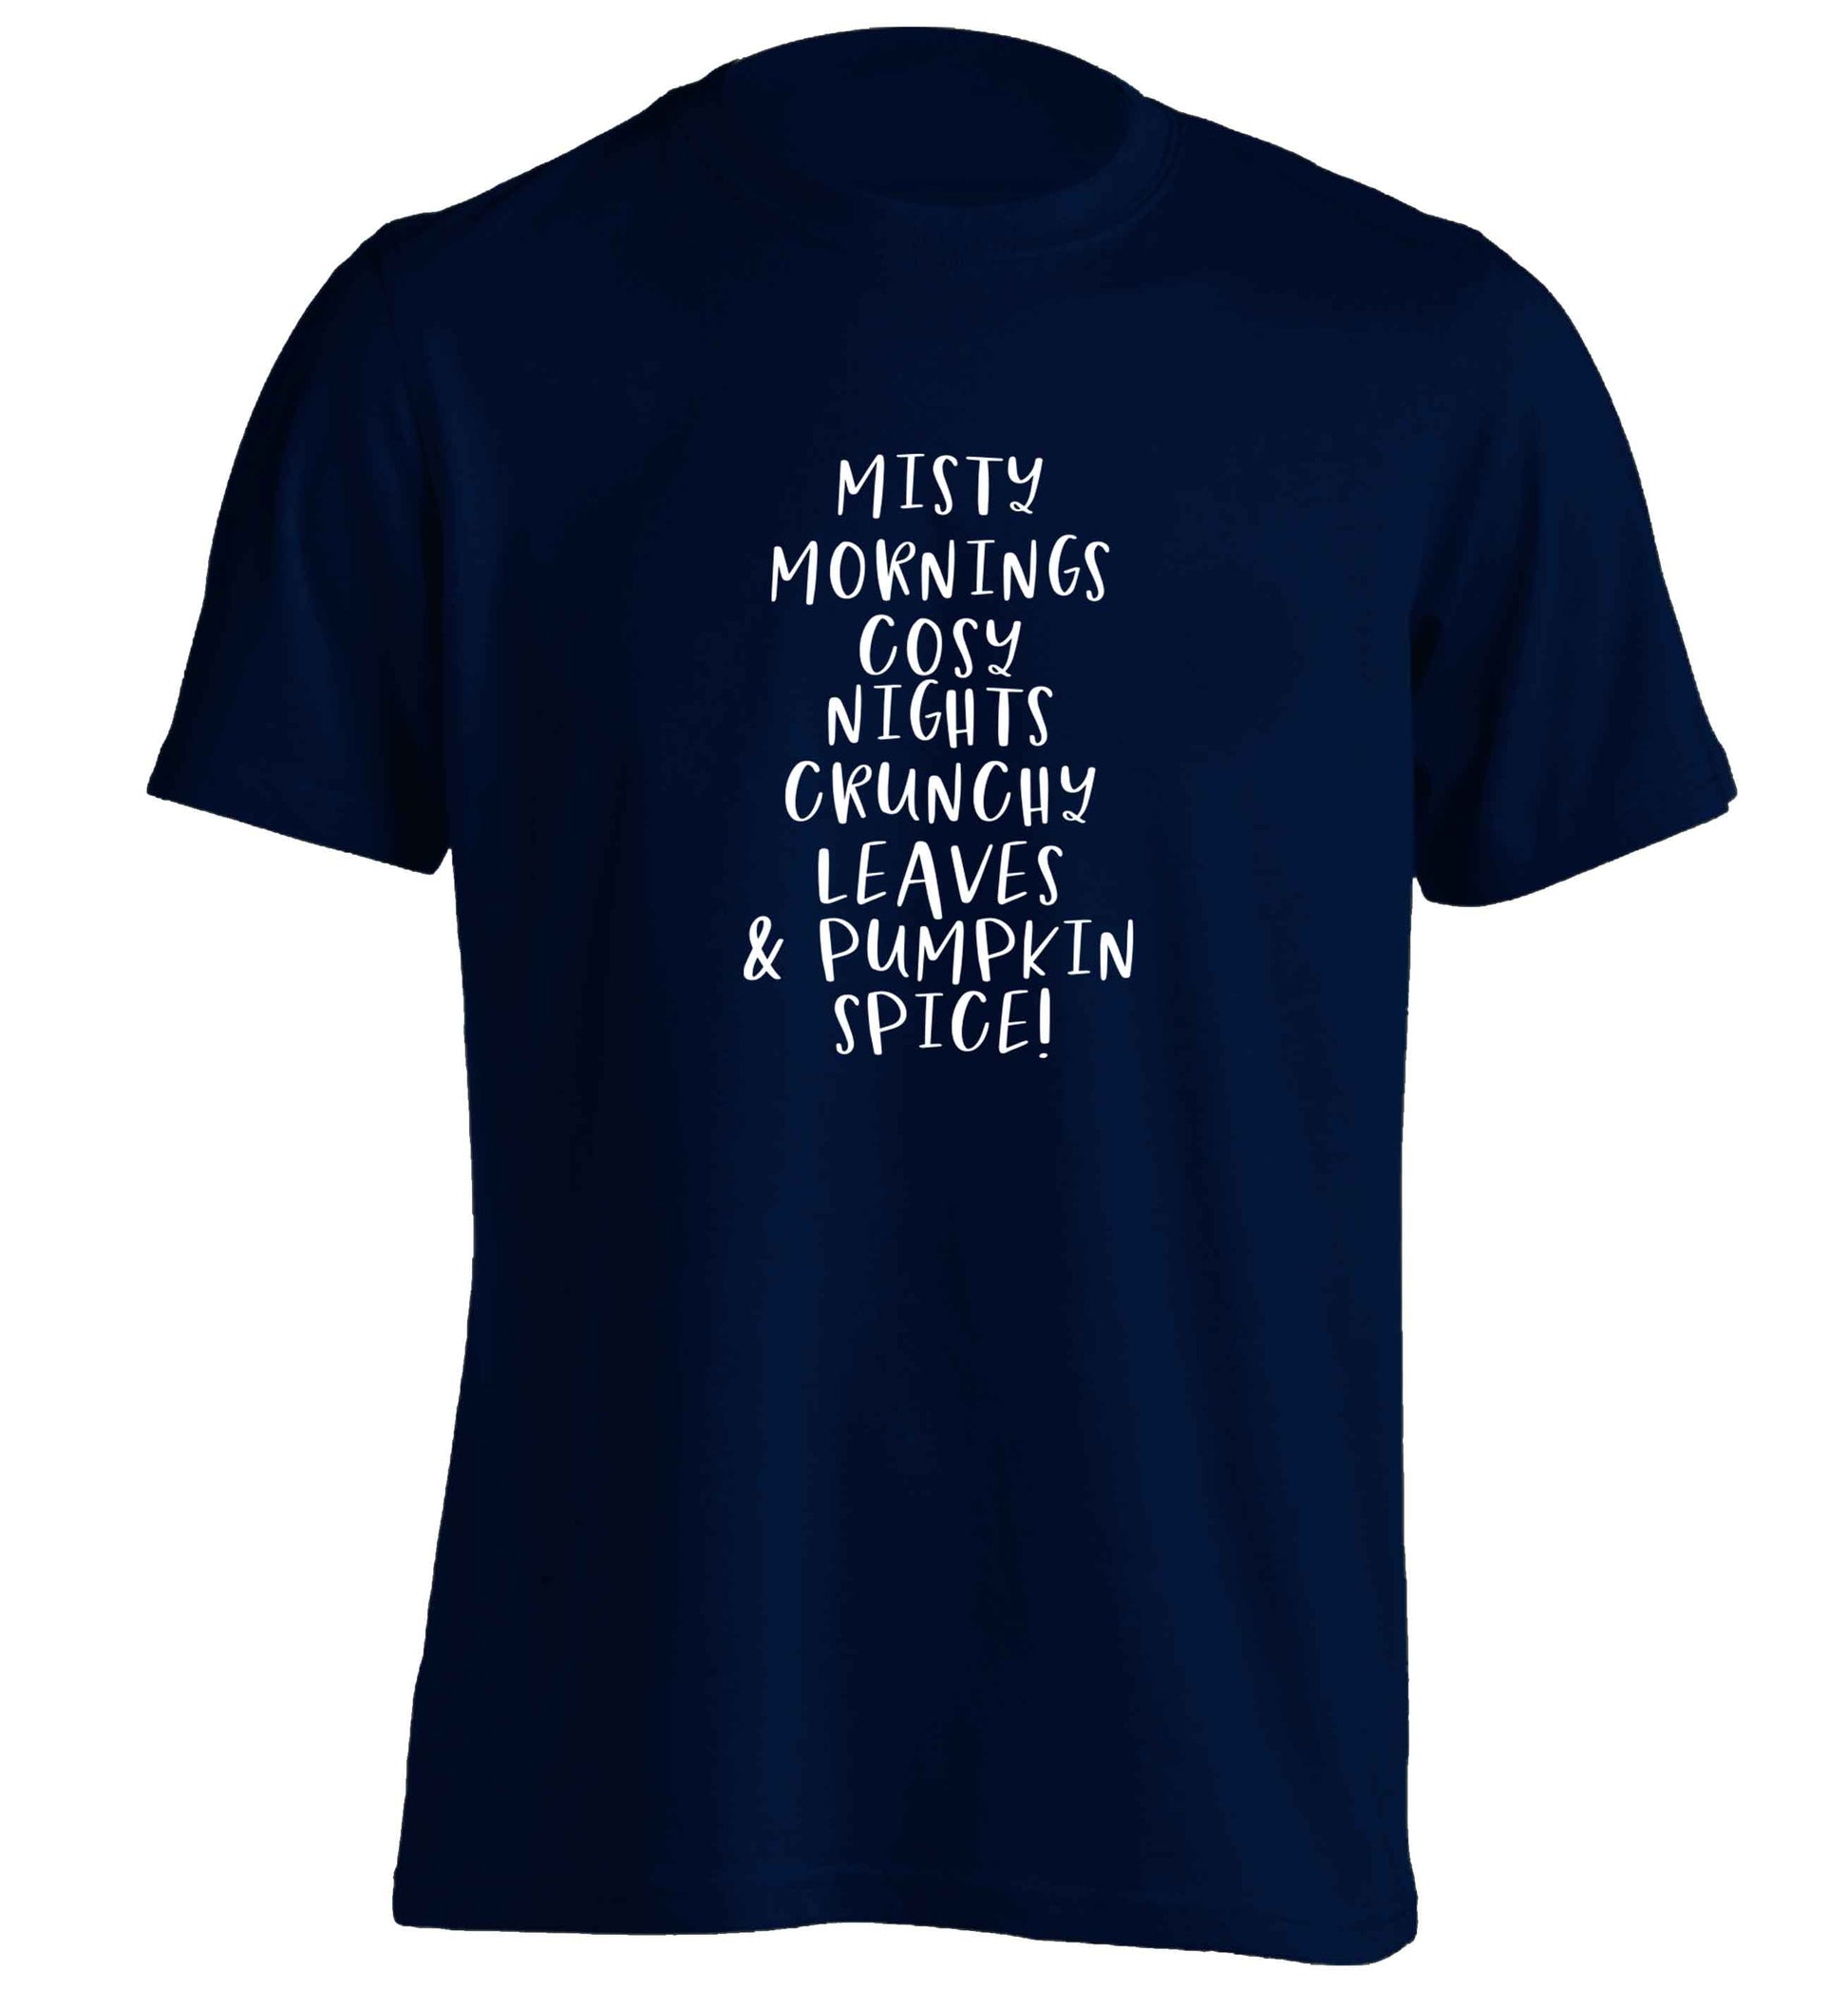 Misty Mornings adults unisex navy Tshirt 2XL